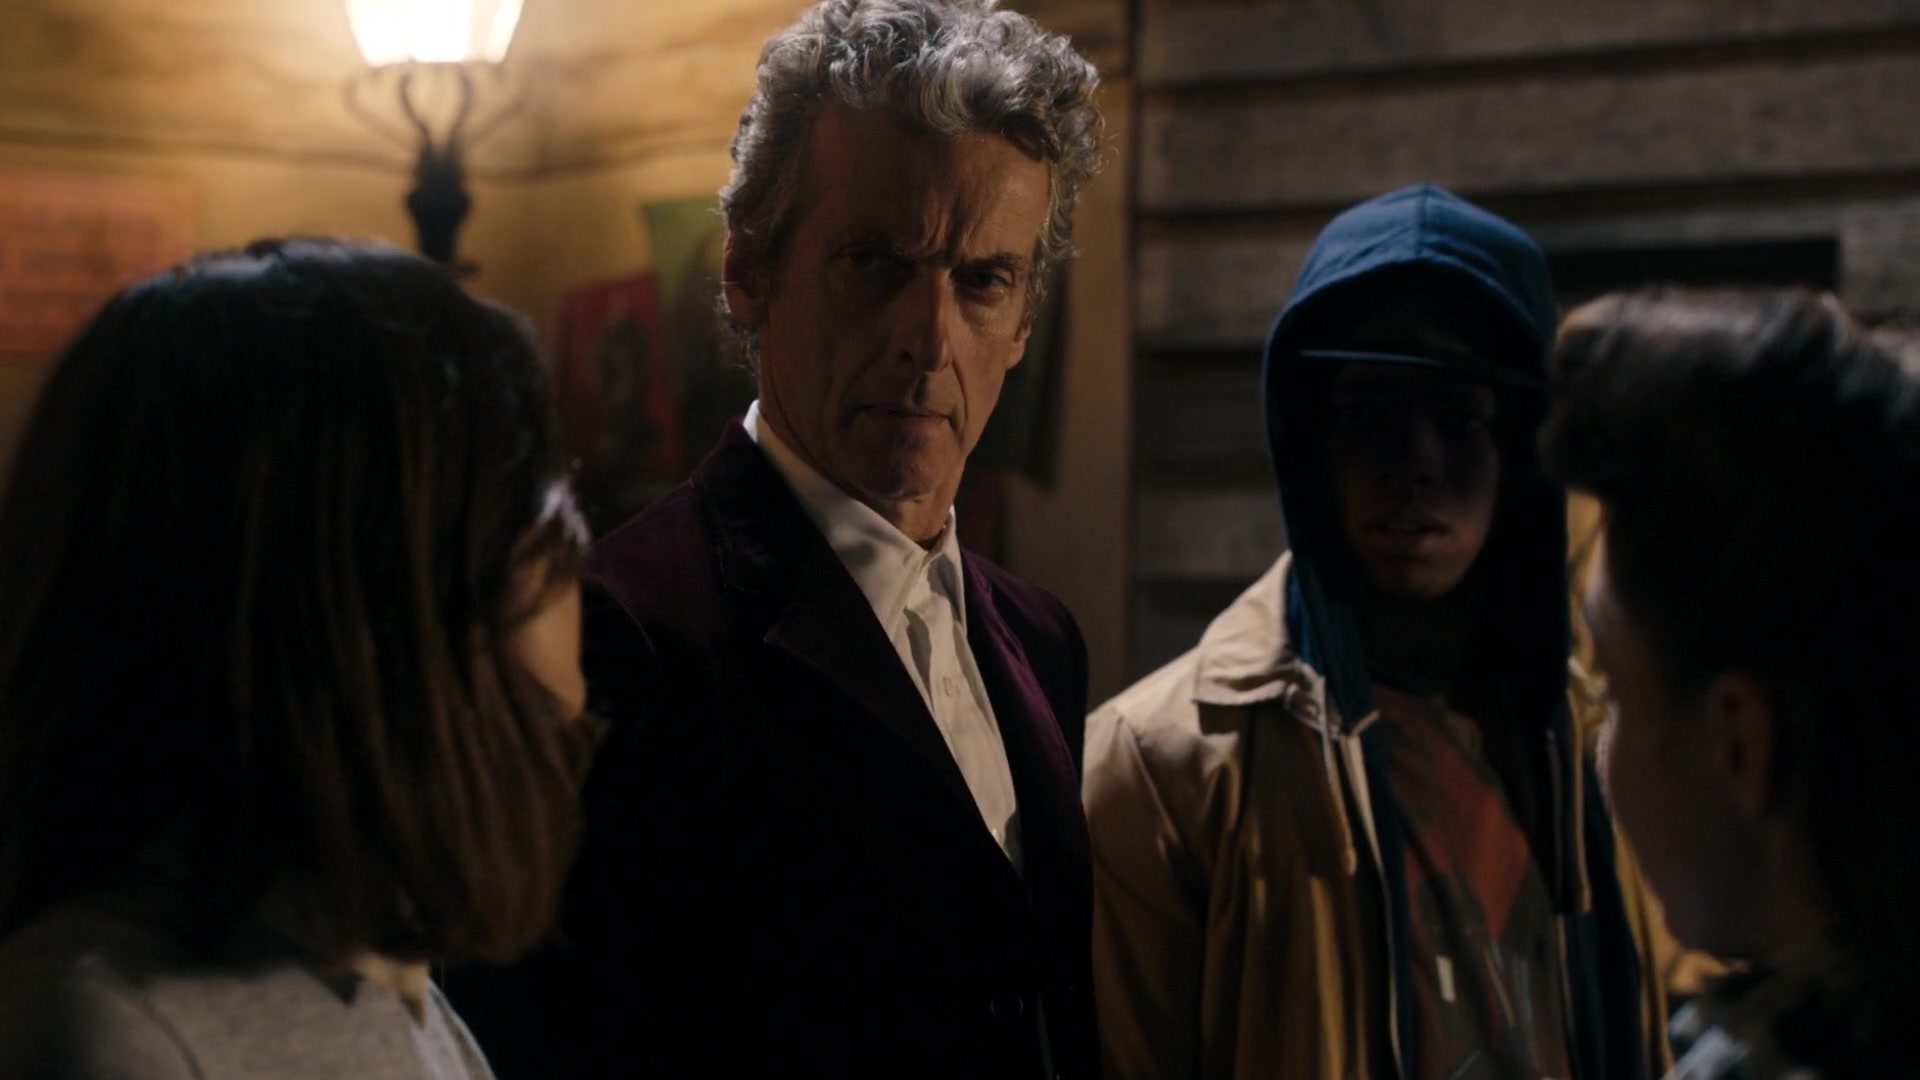 Doctor_Who_9x10-Sleep_No_More_0298.jpg